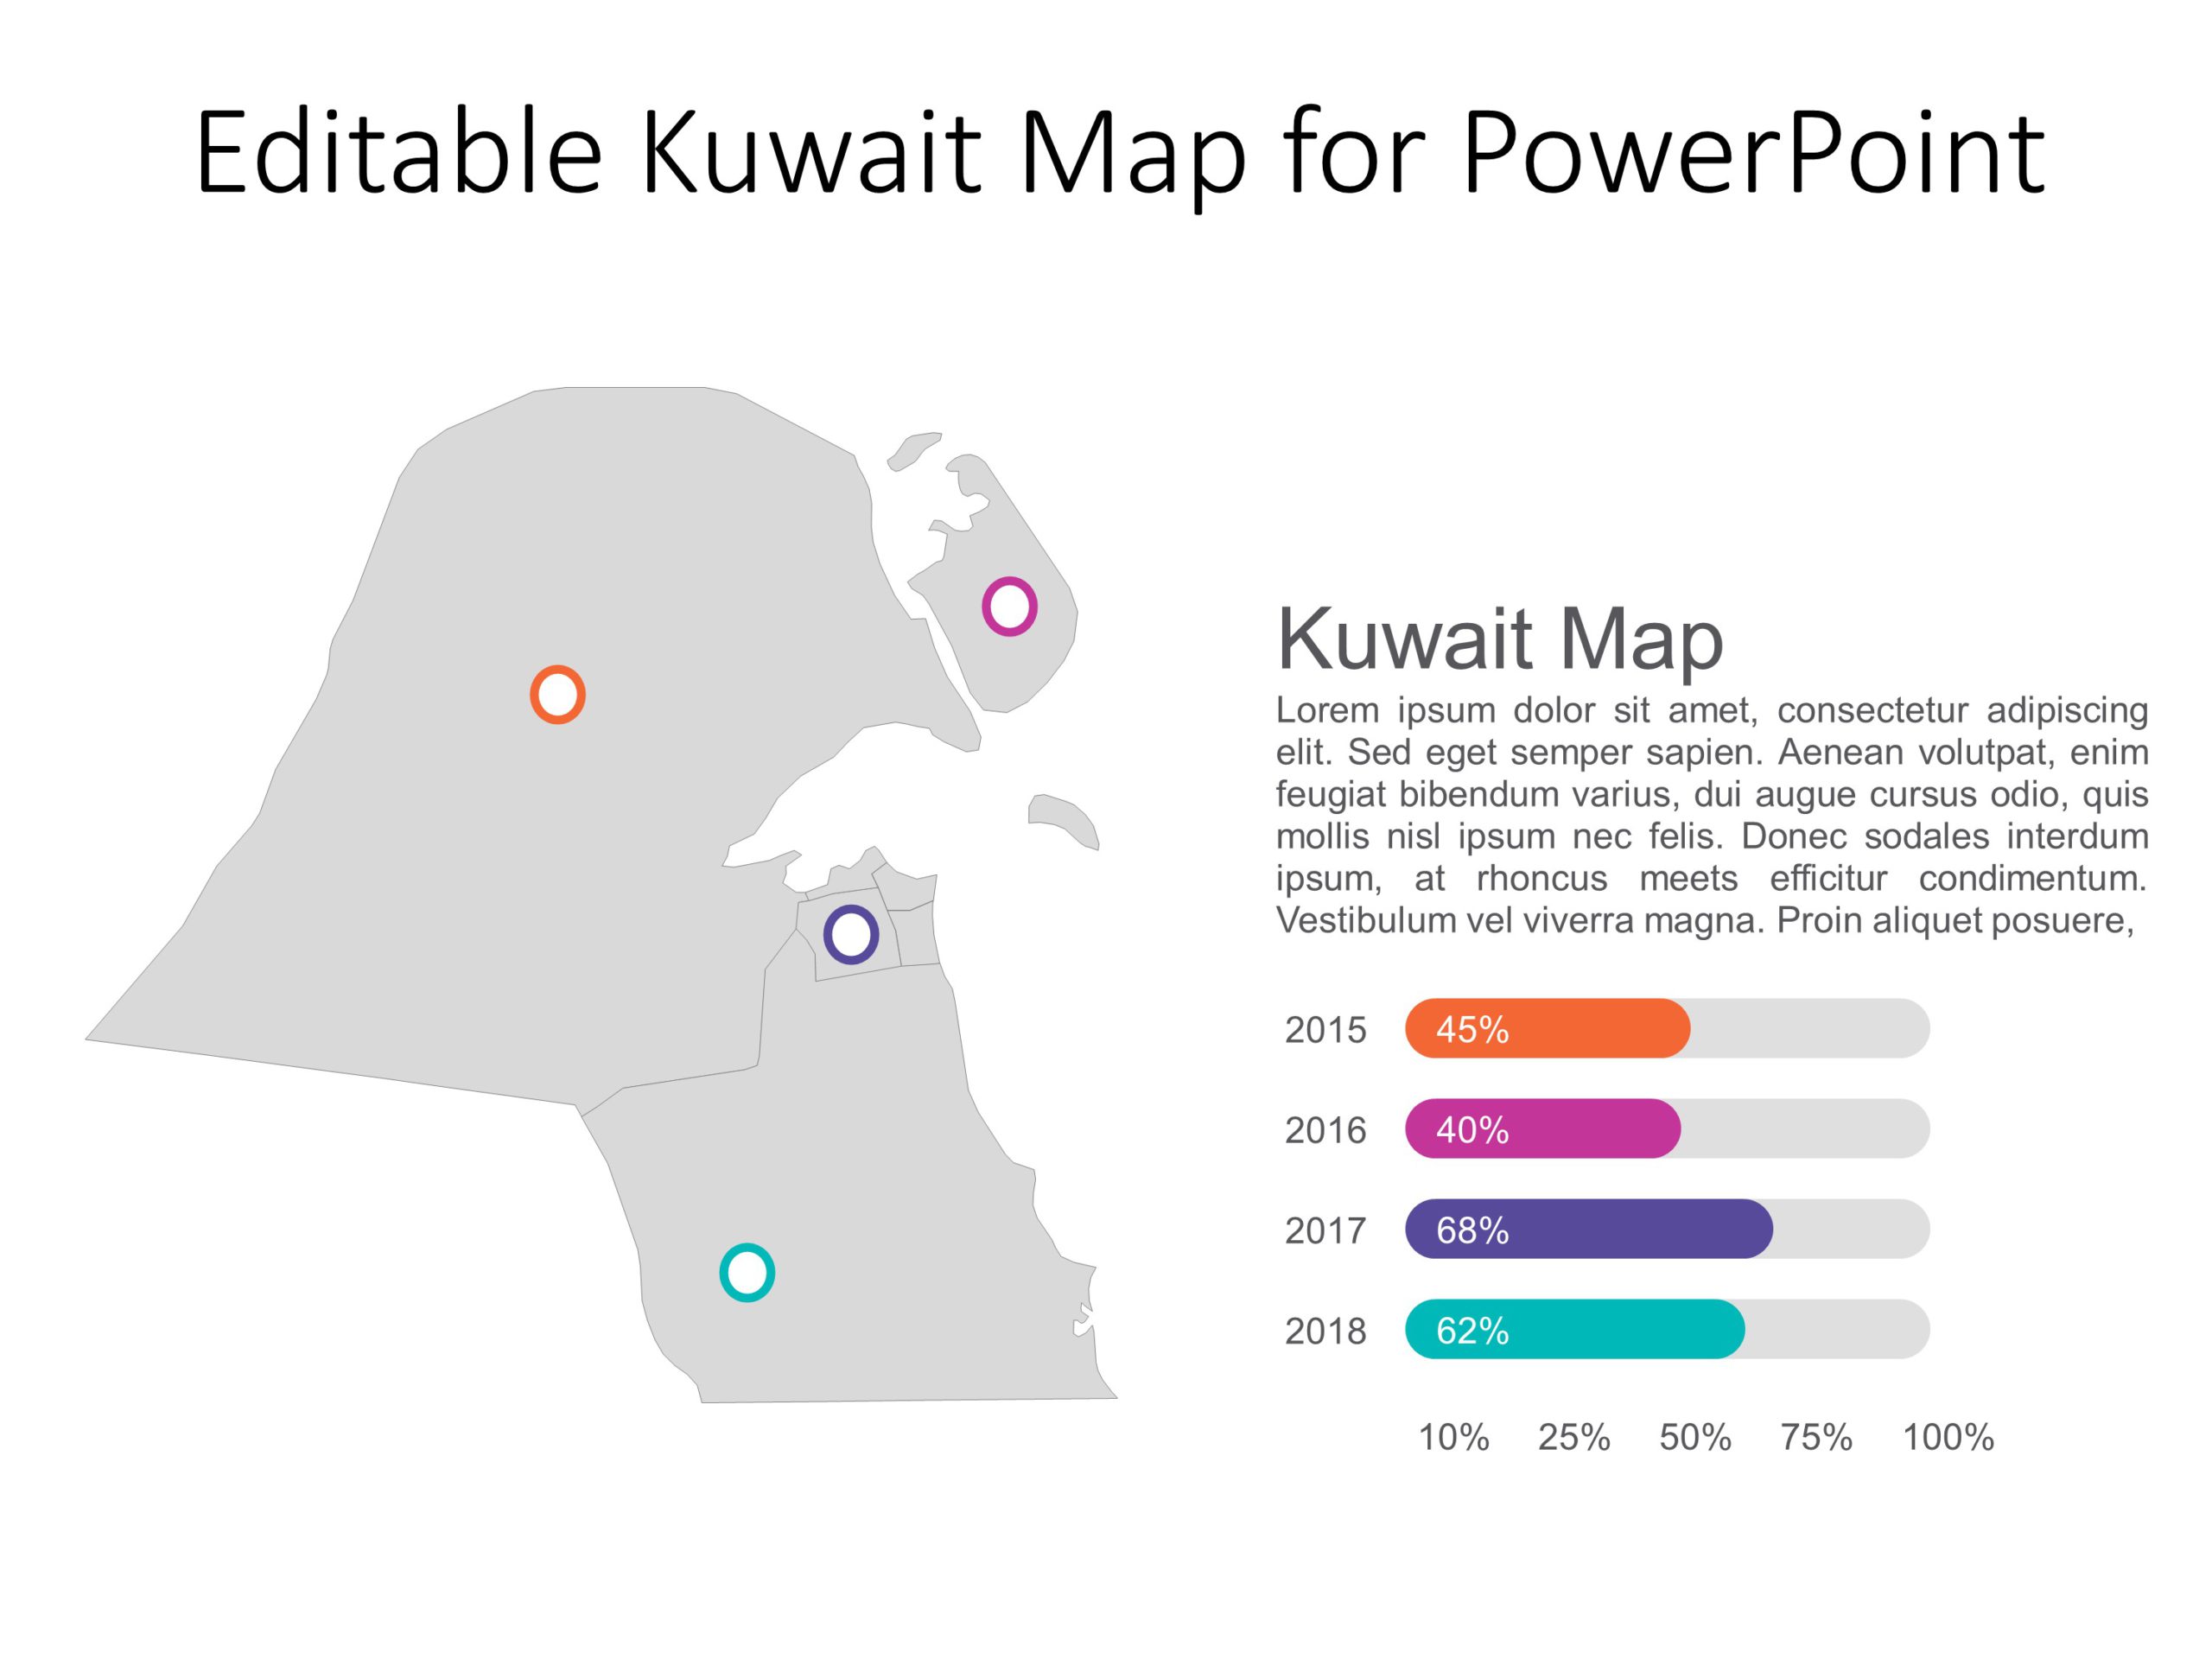 Kuwait Map 4 PowerPoint Template